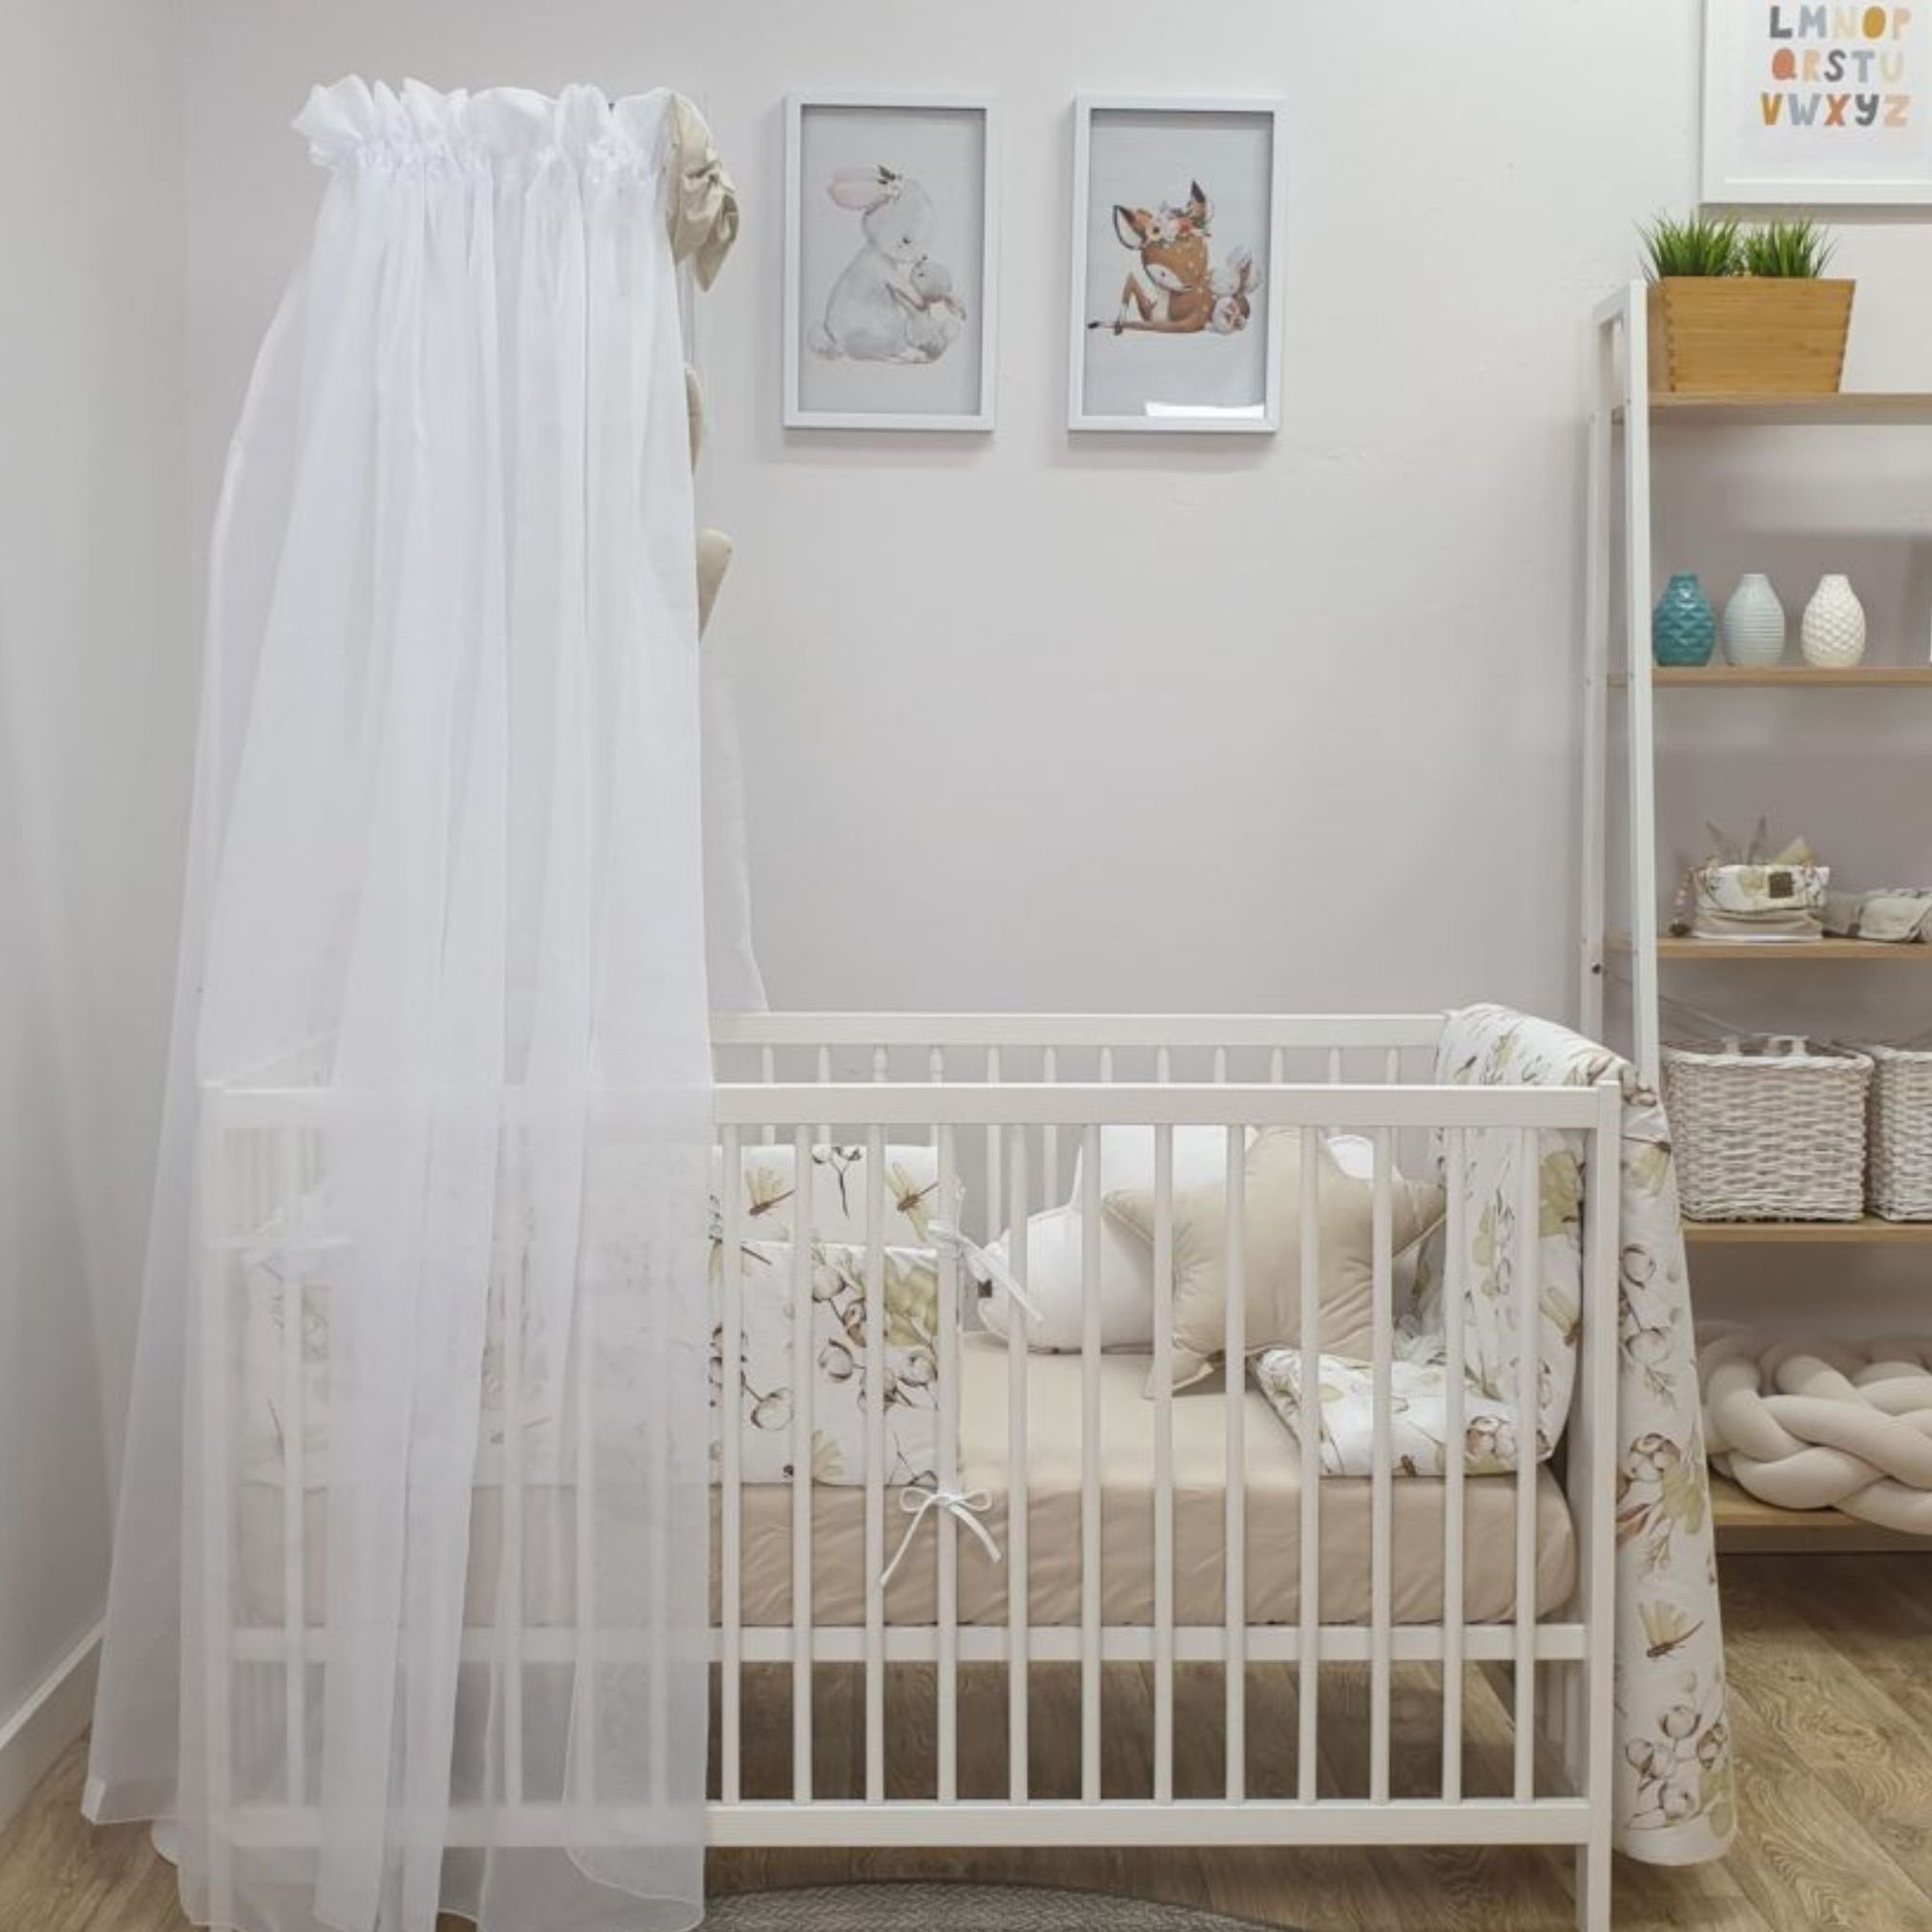 Babybettbezug Baby Bett Set 200 Cotton beige - für Babybett 70x140 Bett  Ausstattung, Babymajawelt, Modernes Design, Top Baumwolle, Made in EU